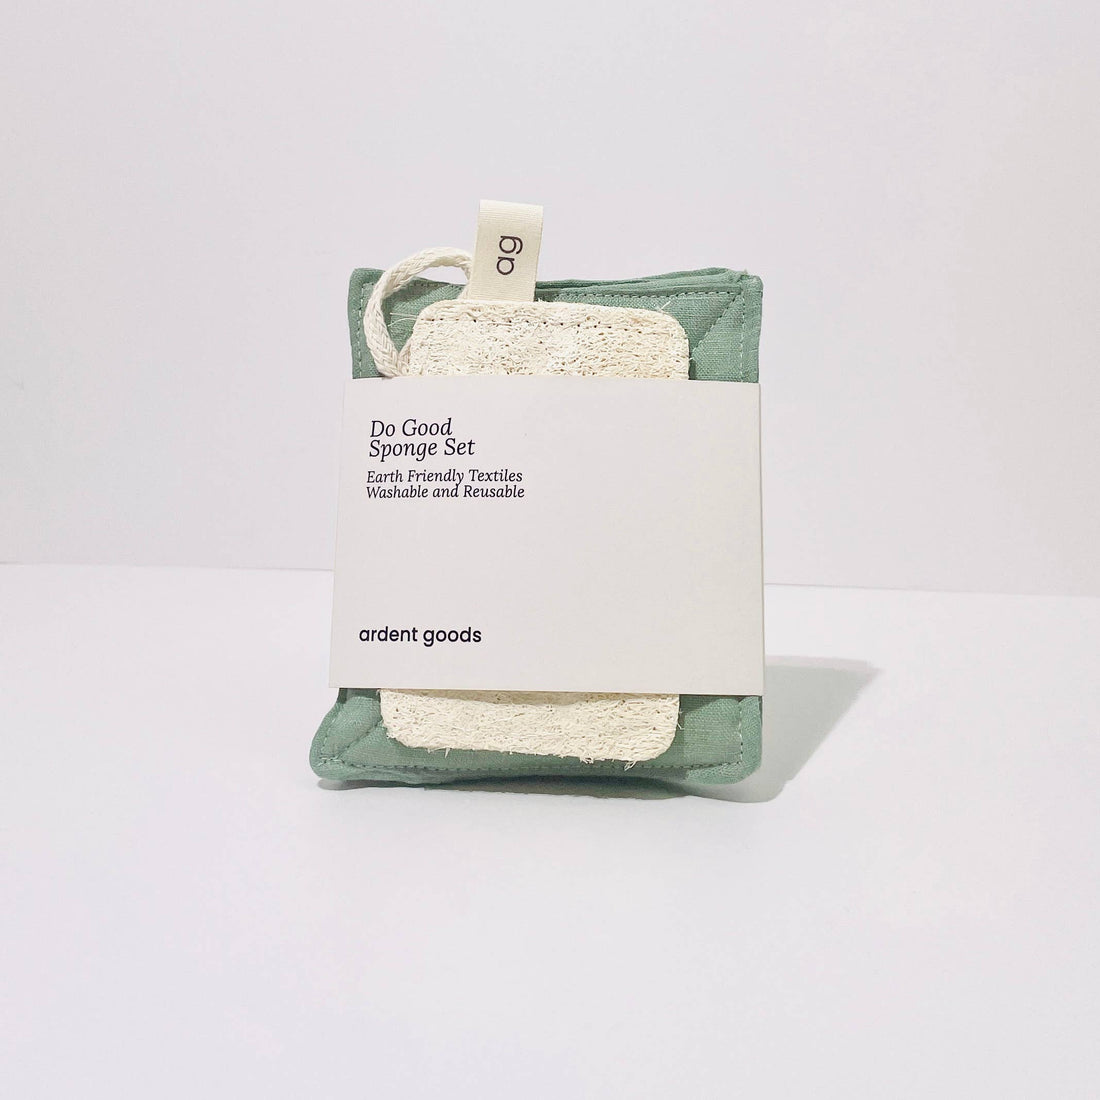 ardent goods - Squishy Eco Friendly Linen Sponge Set